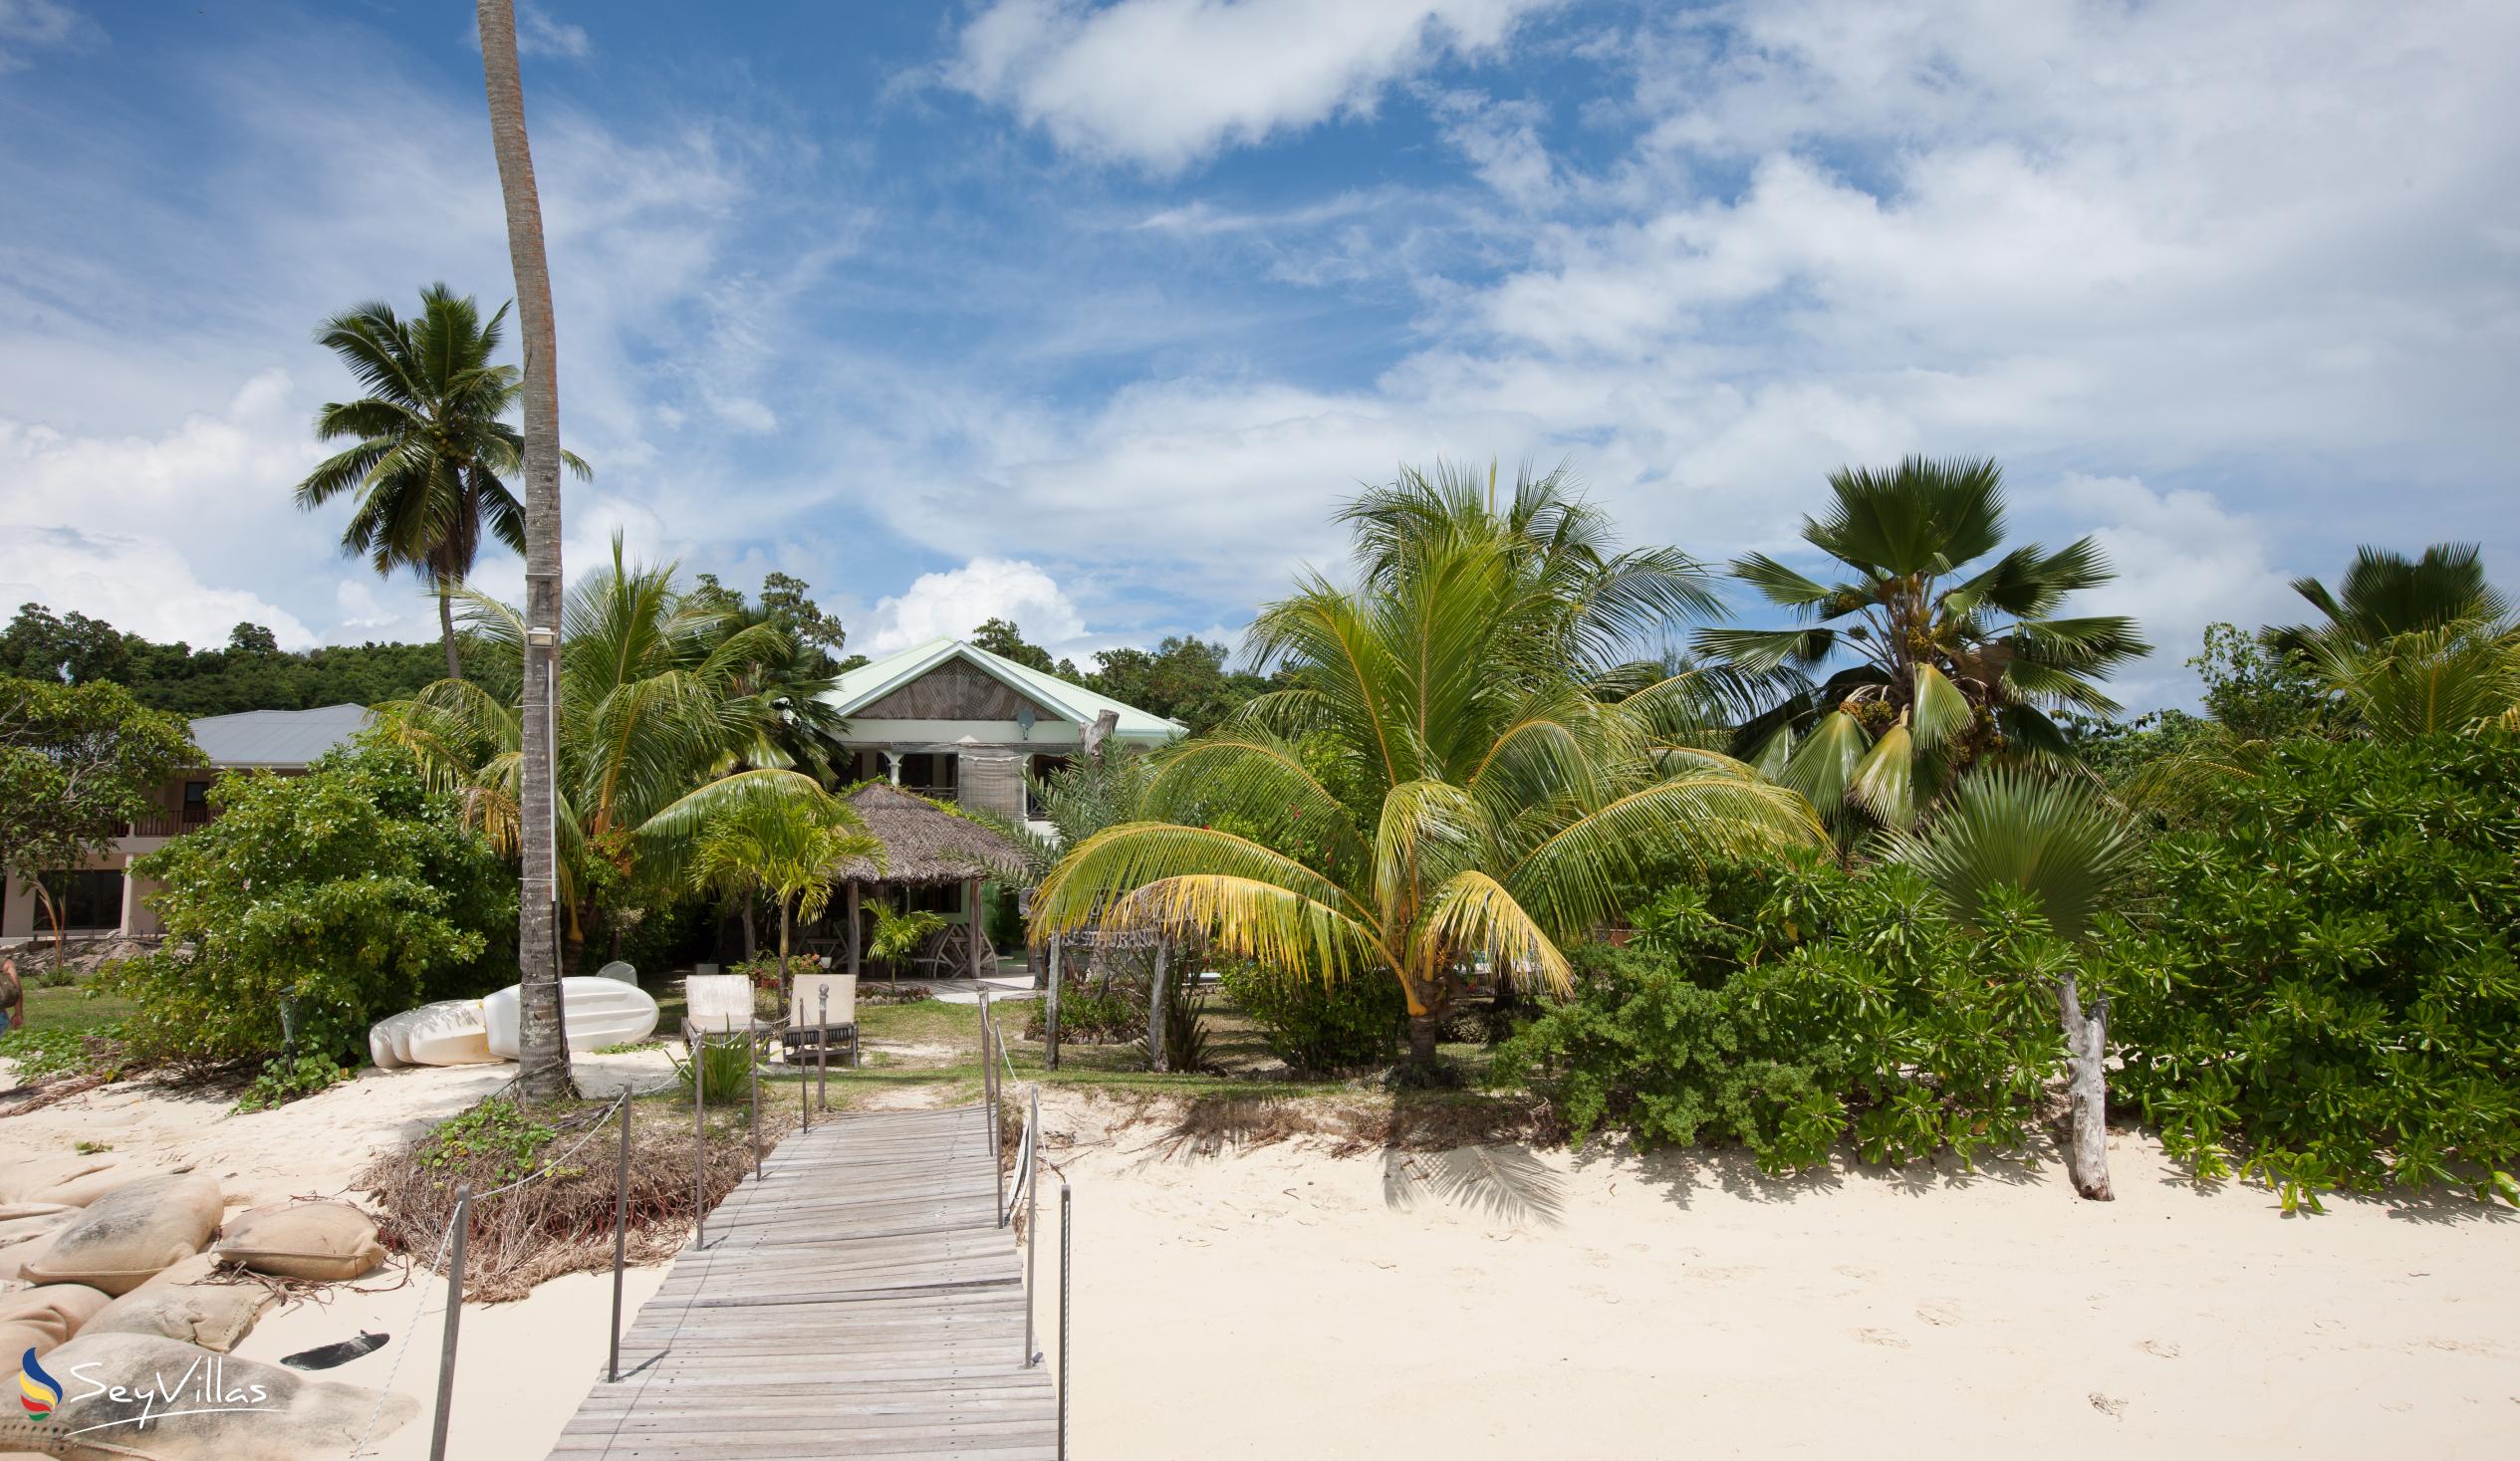 Photo 47: Villa de Cerf - Outdoor area - Cerf Island (Seychelles)